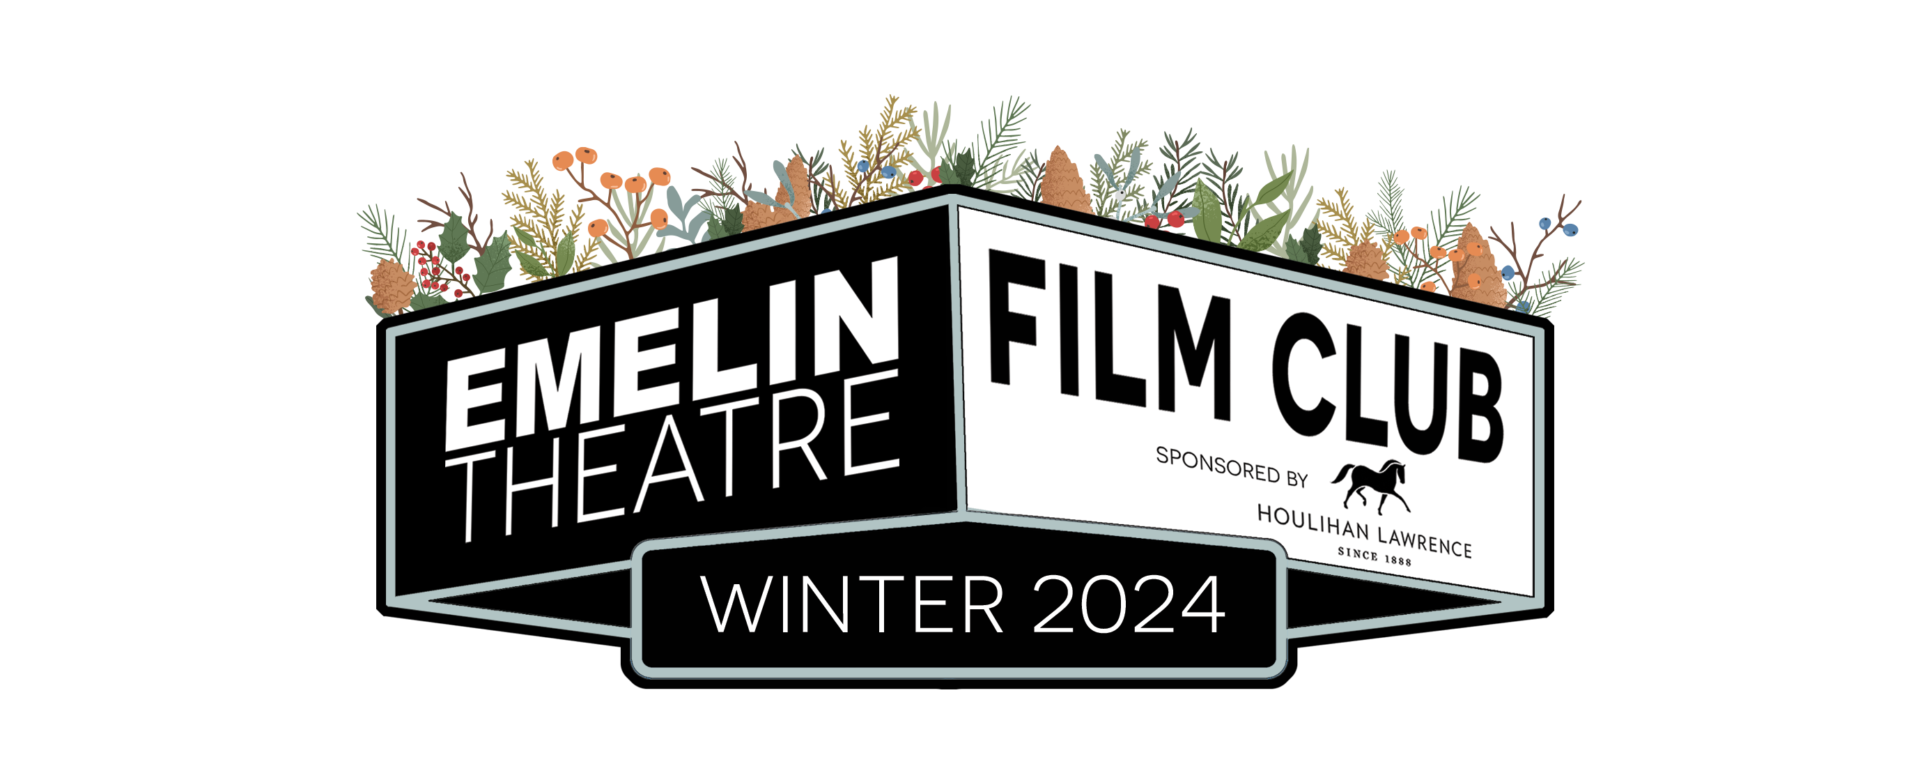 Winter Film Club 2024